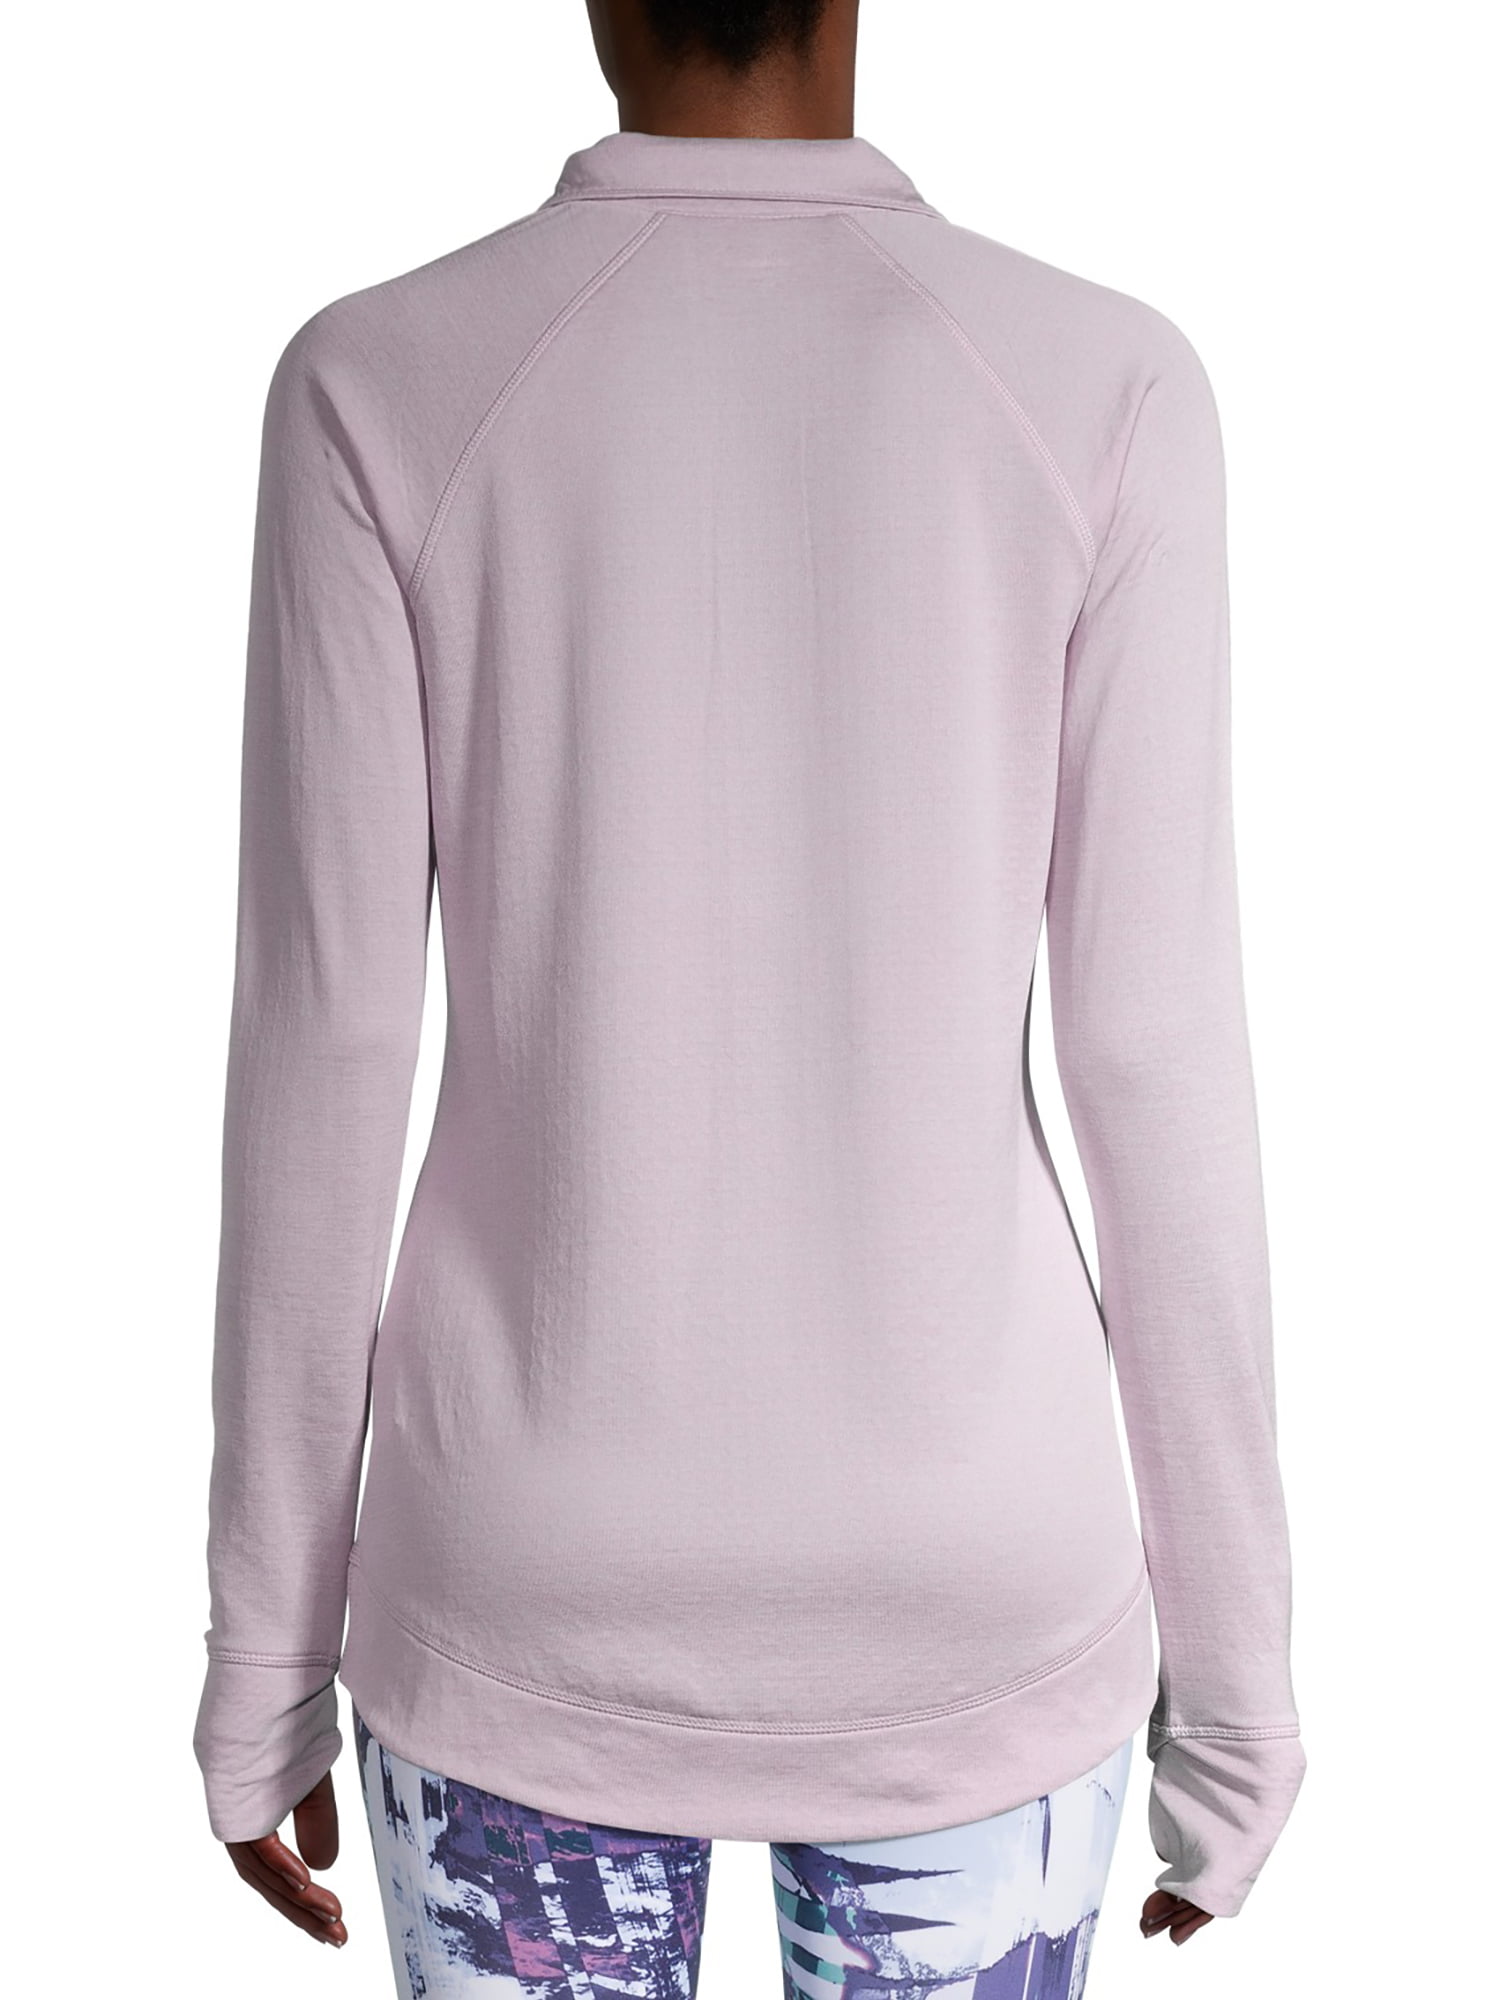 Avia Pink Textured Pullover Top Size Medium Long Sleeve High Neck